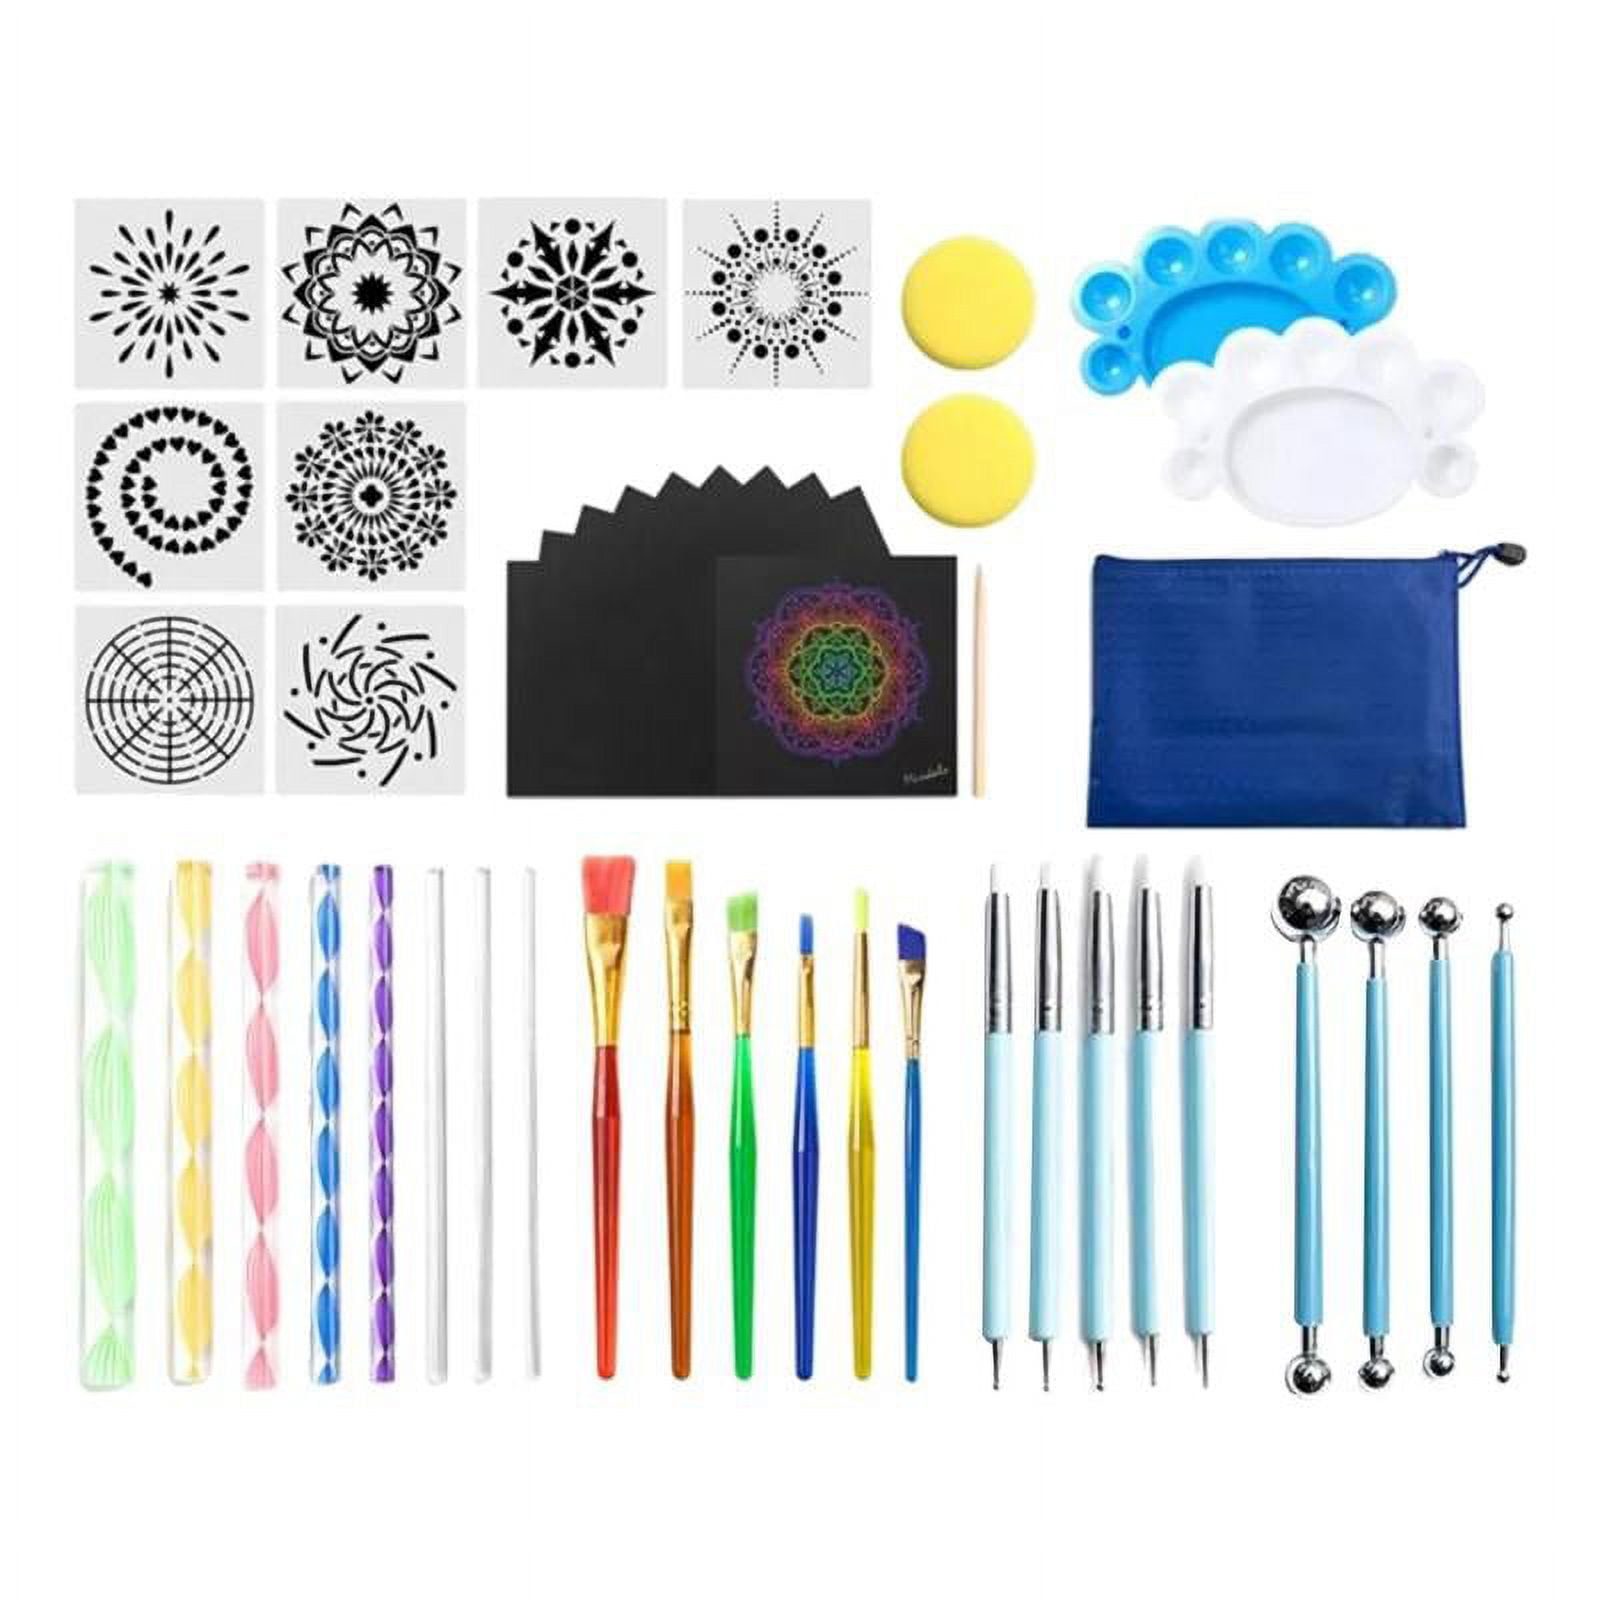 Dot Mandala Painting Kit - Dotting Tools and Stencils for Dot Mandala  Painting